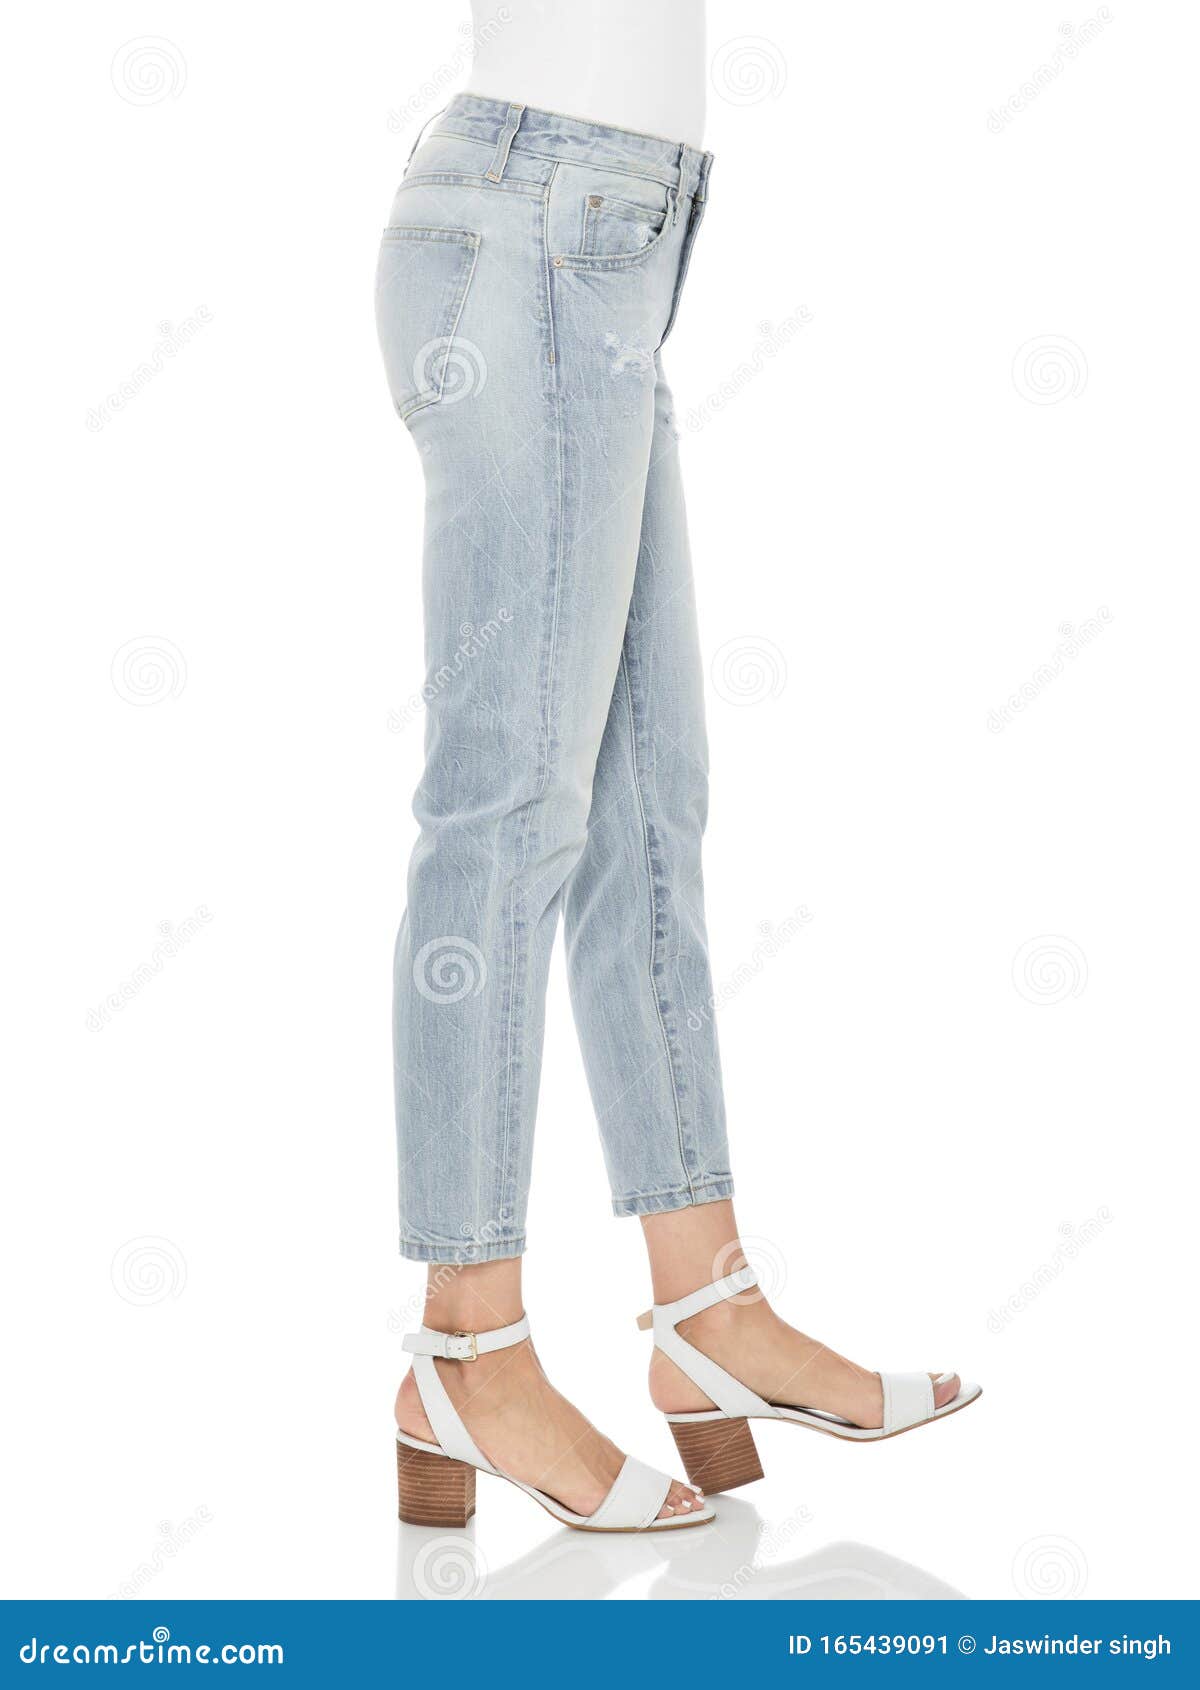 Fashion Crush - High Heels & Skinny Jeans - Maison de Cinq